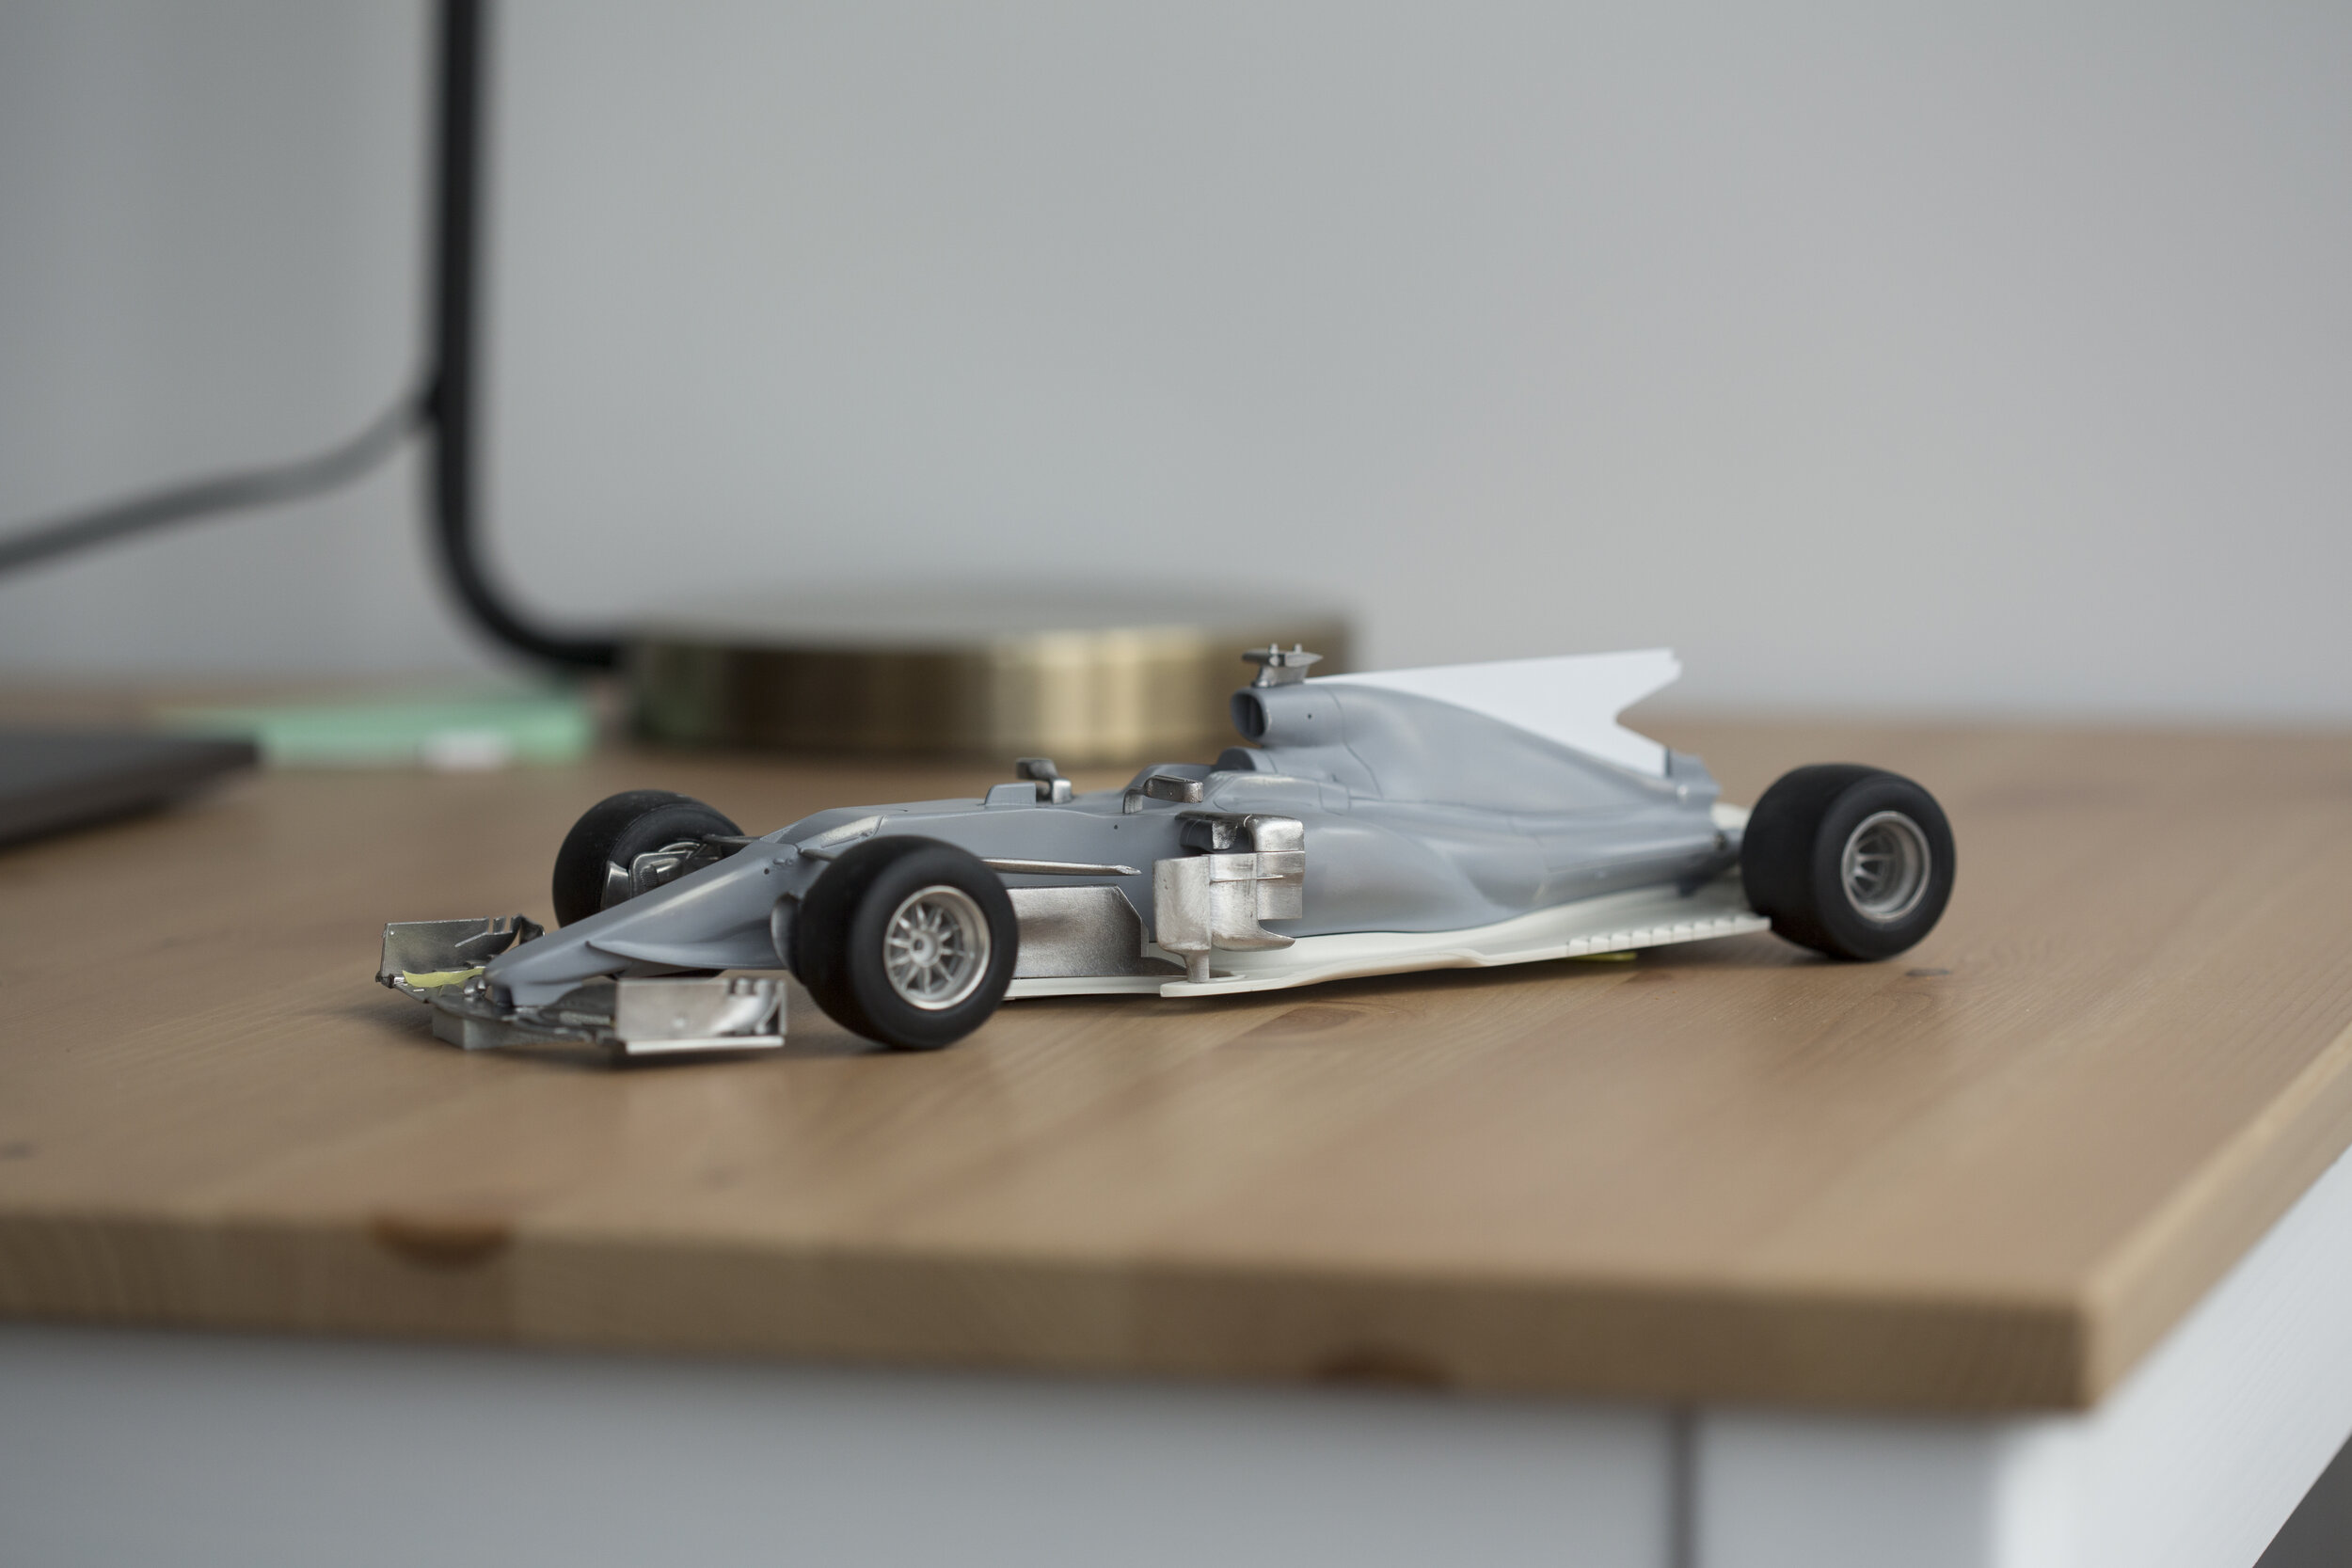 Monopost 1/20 Mercedes AMG W08 | WIP Blog | Etch primer test fit 1